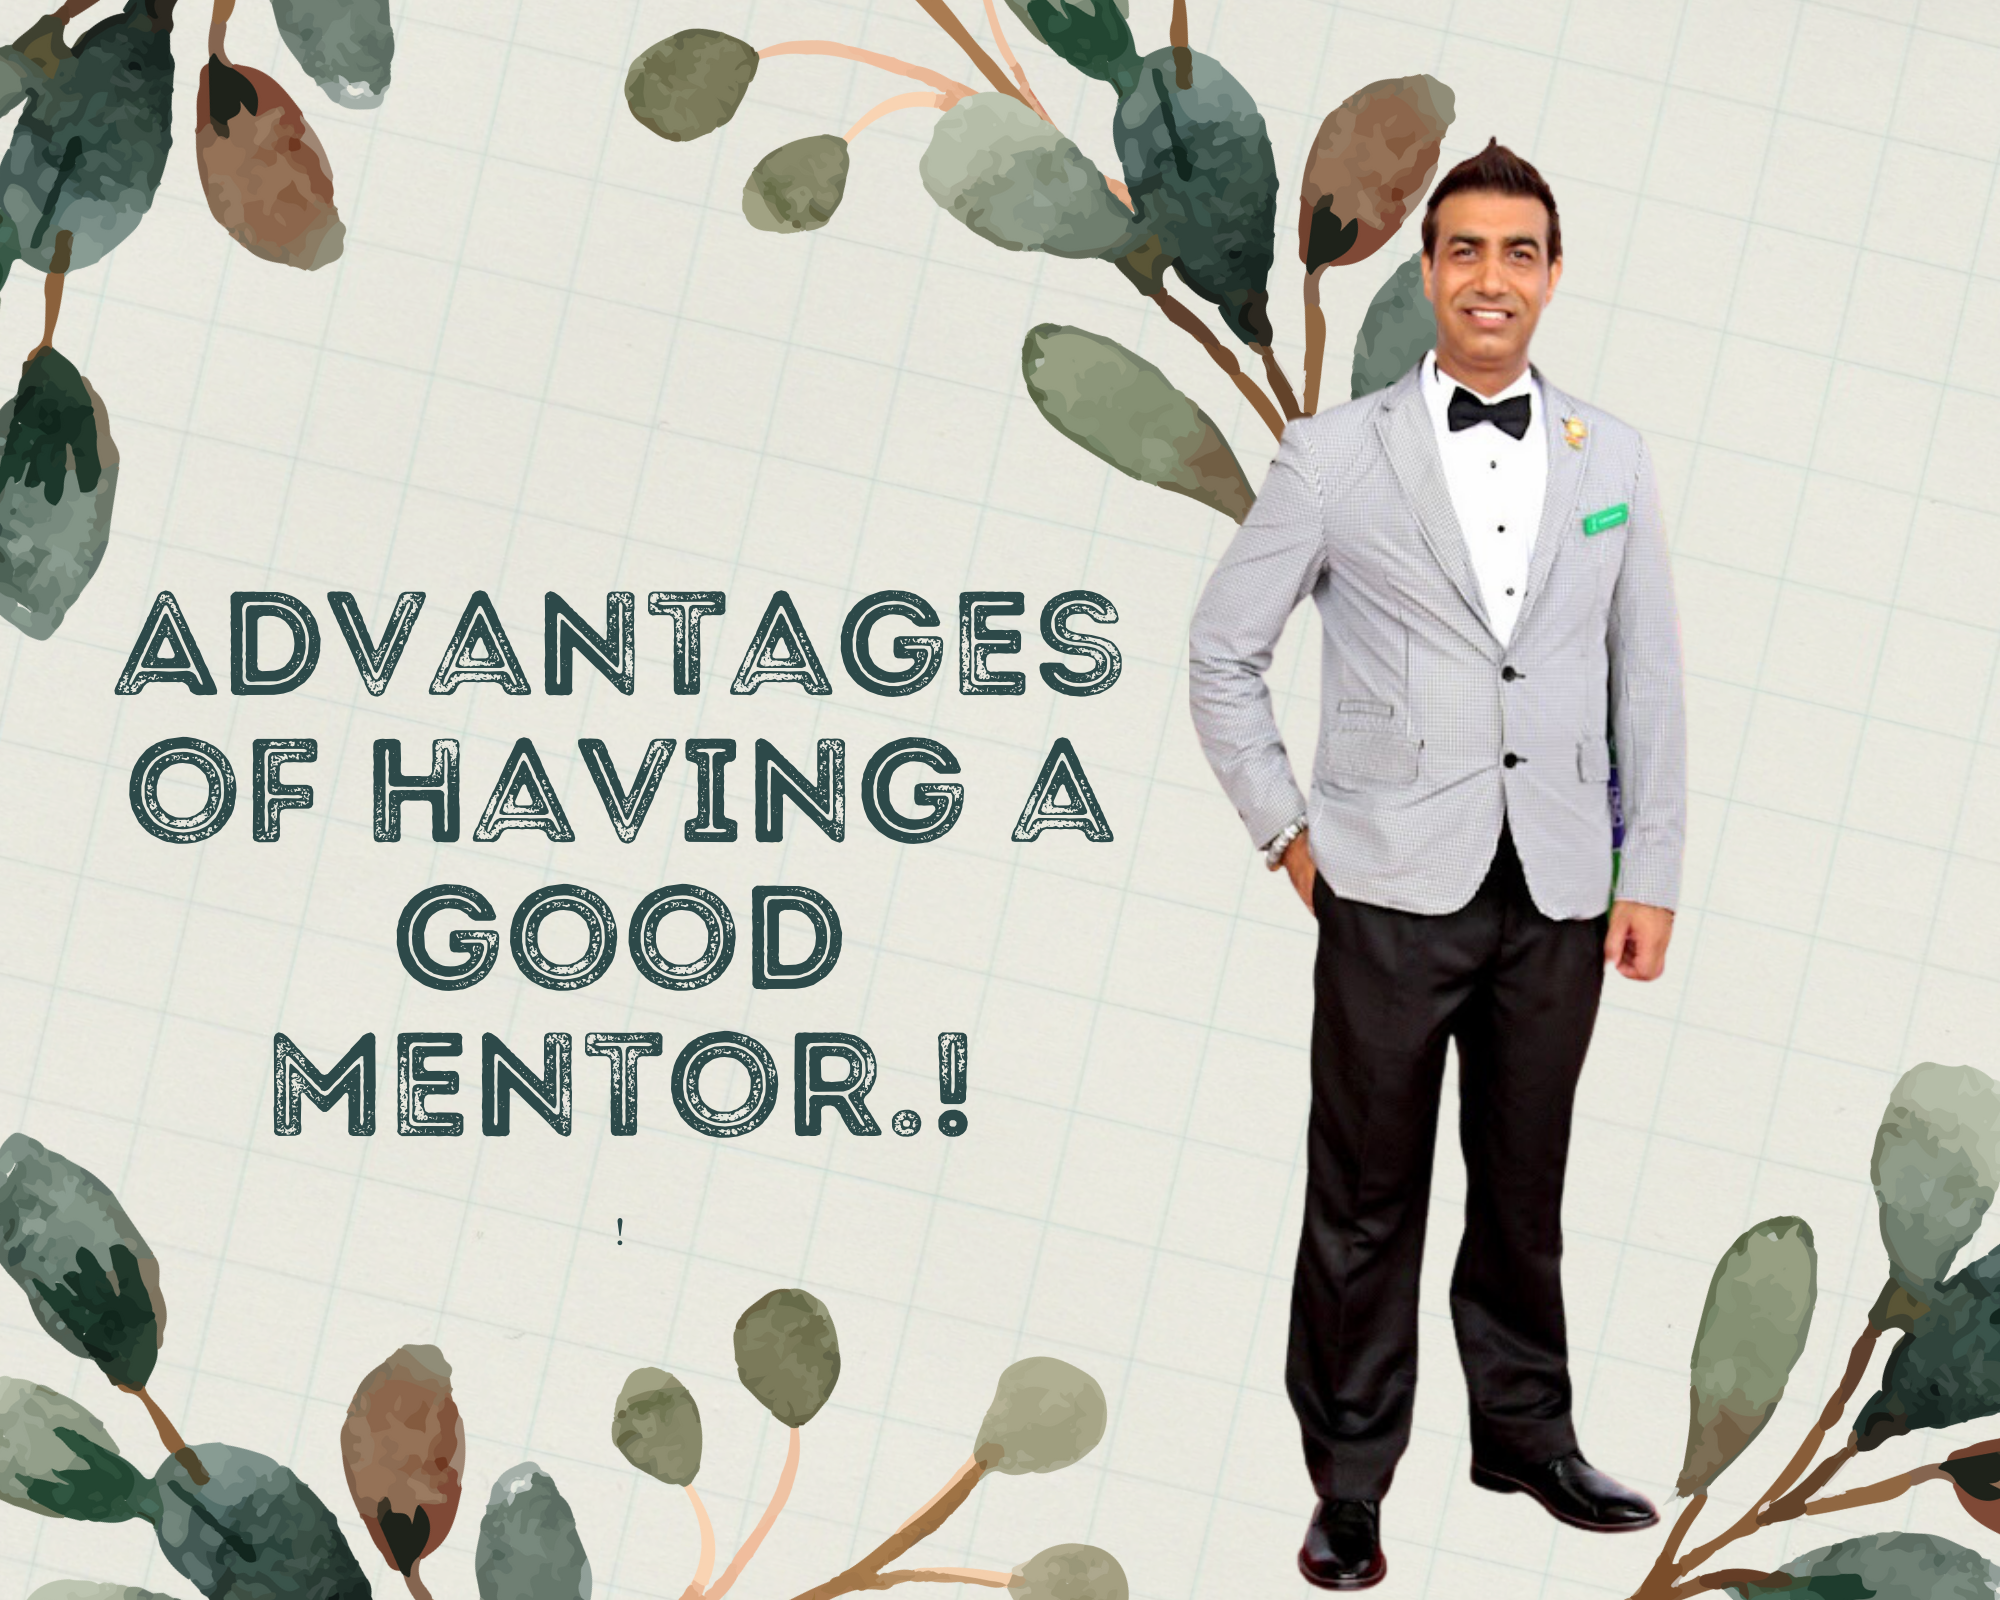 Advantages of having a good mentor.